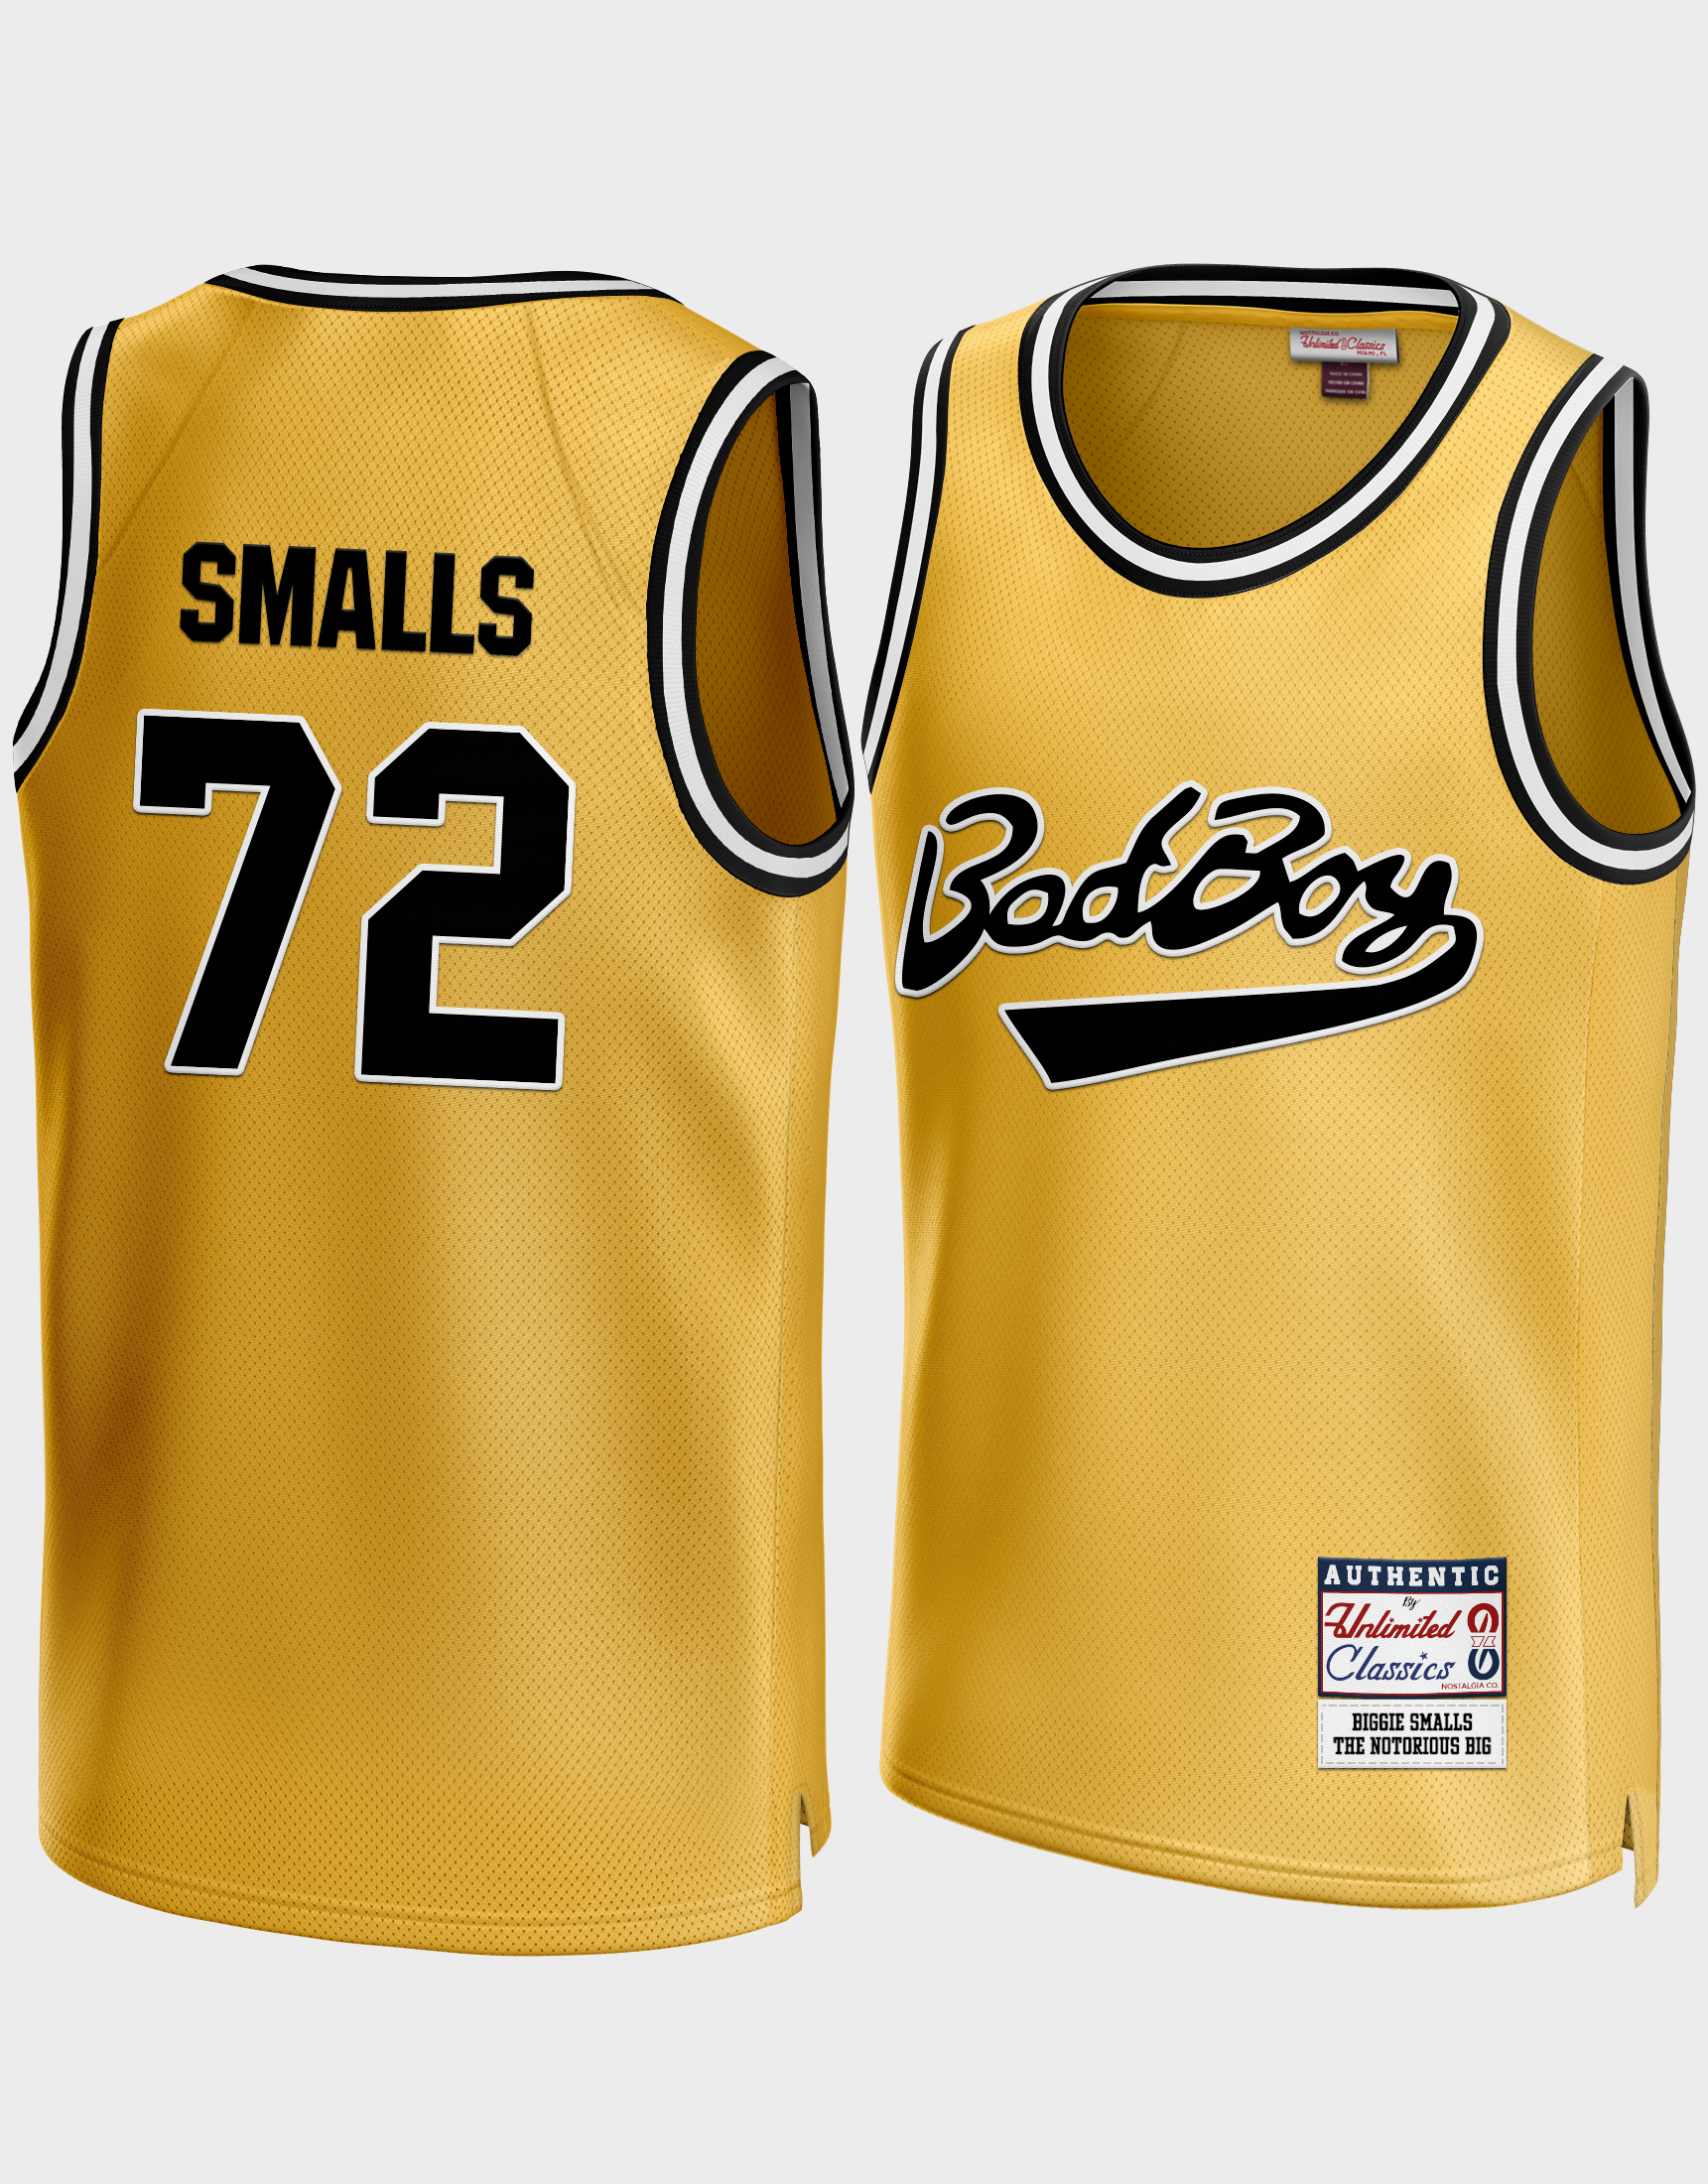 Biggie Smalls #72 Notorious Big Bad Boy Yellow Jersey